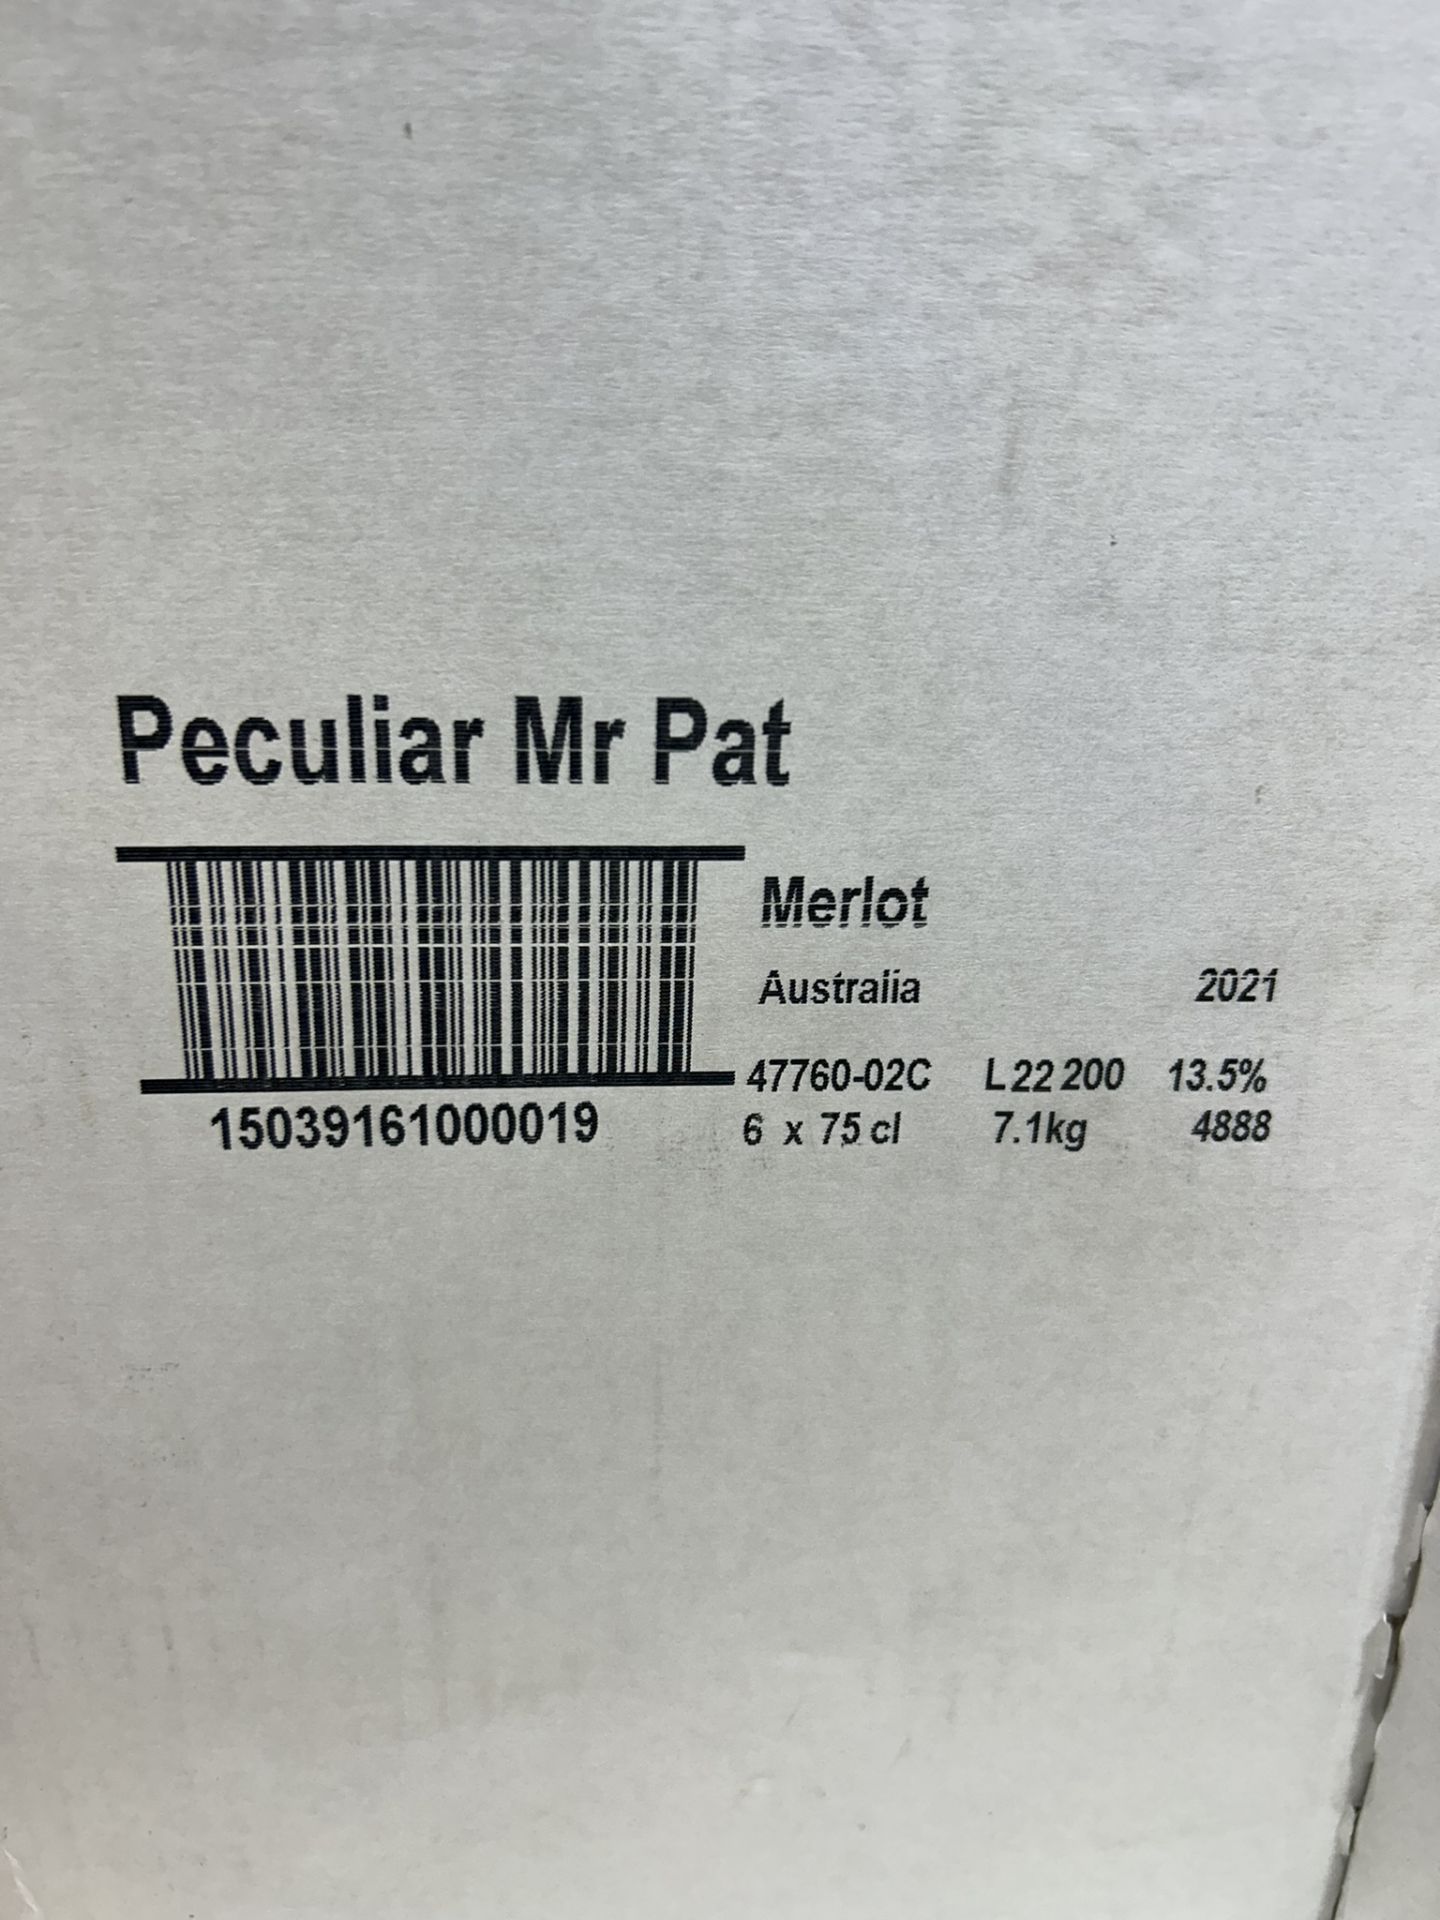 2 x Crates of Peculiar Mr Pat Australian Merlot Wine & 12 x Loose Bottles (24 x Bottles in Total) - Image 2 of 5